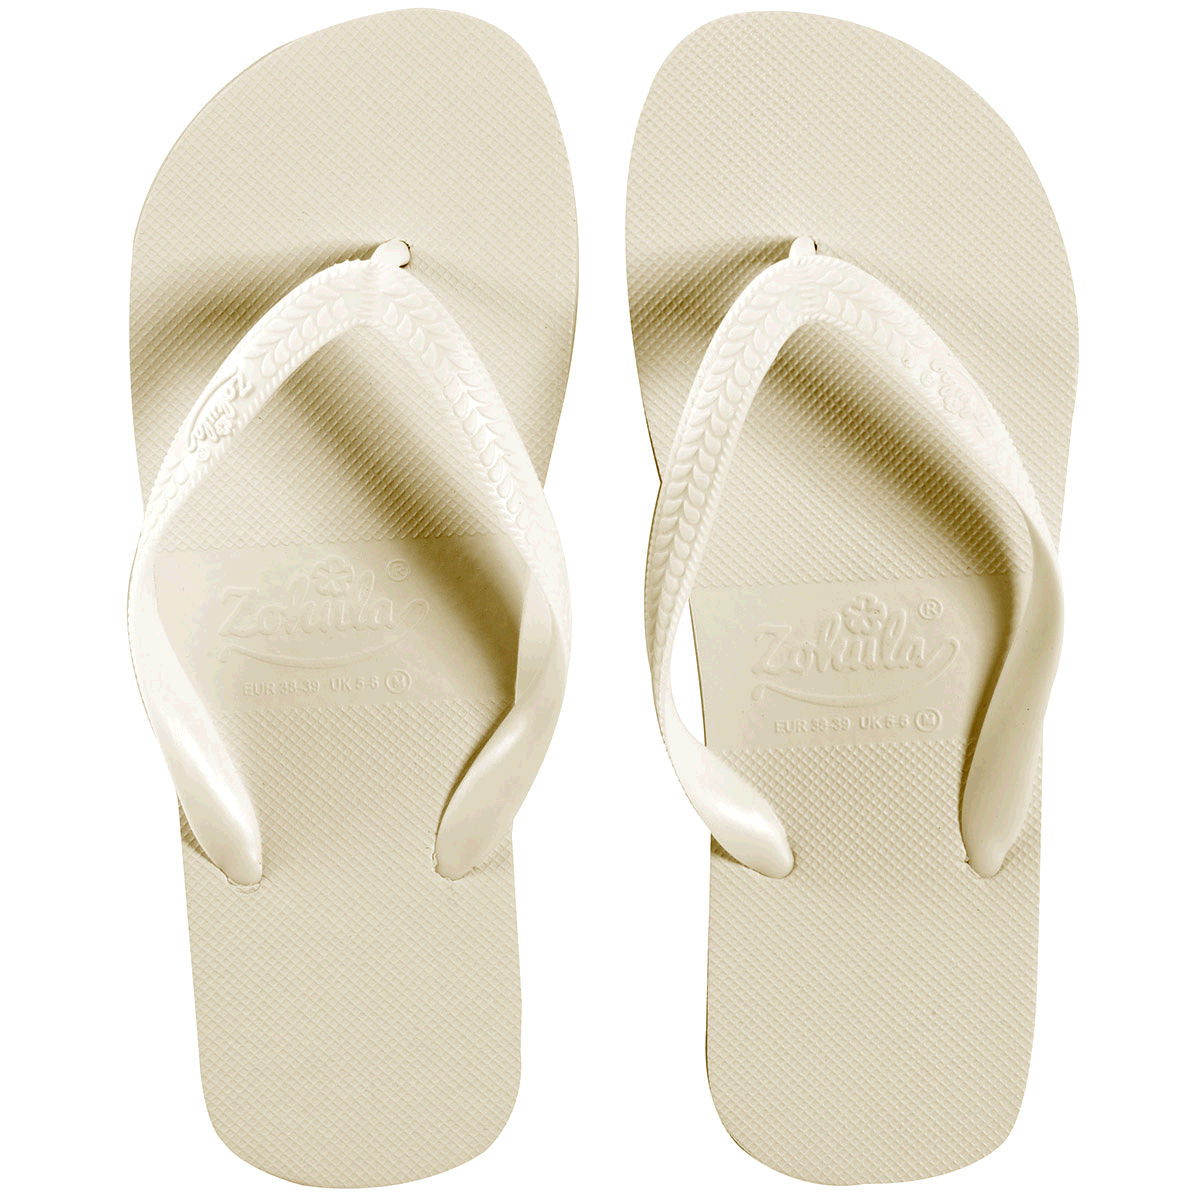 Zohula Originals White Flip Flops – Wedding Flip Flops